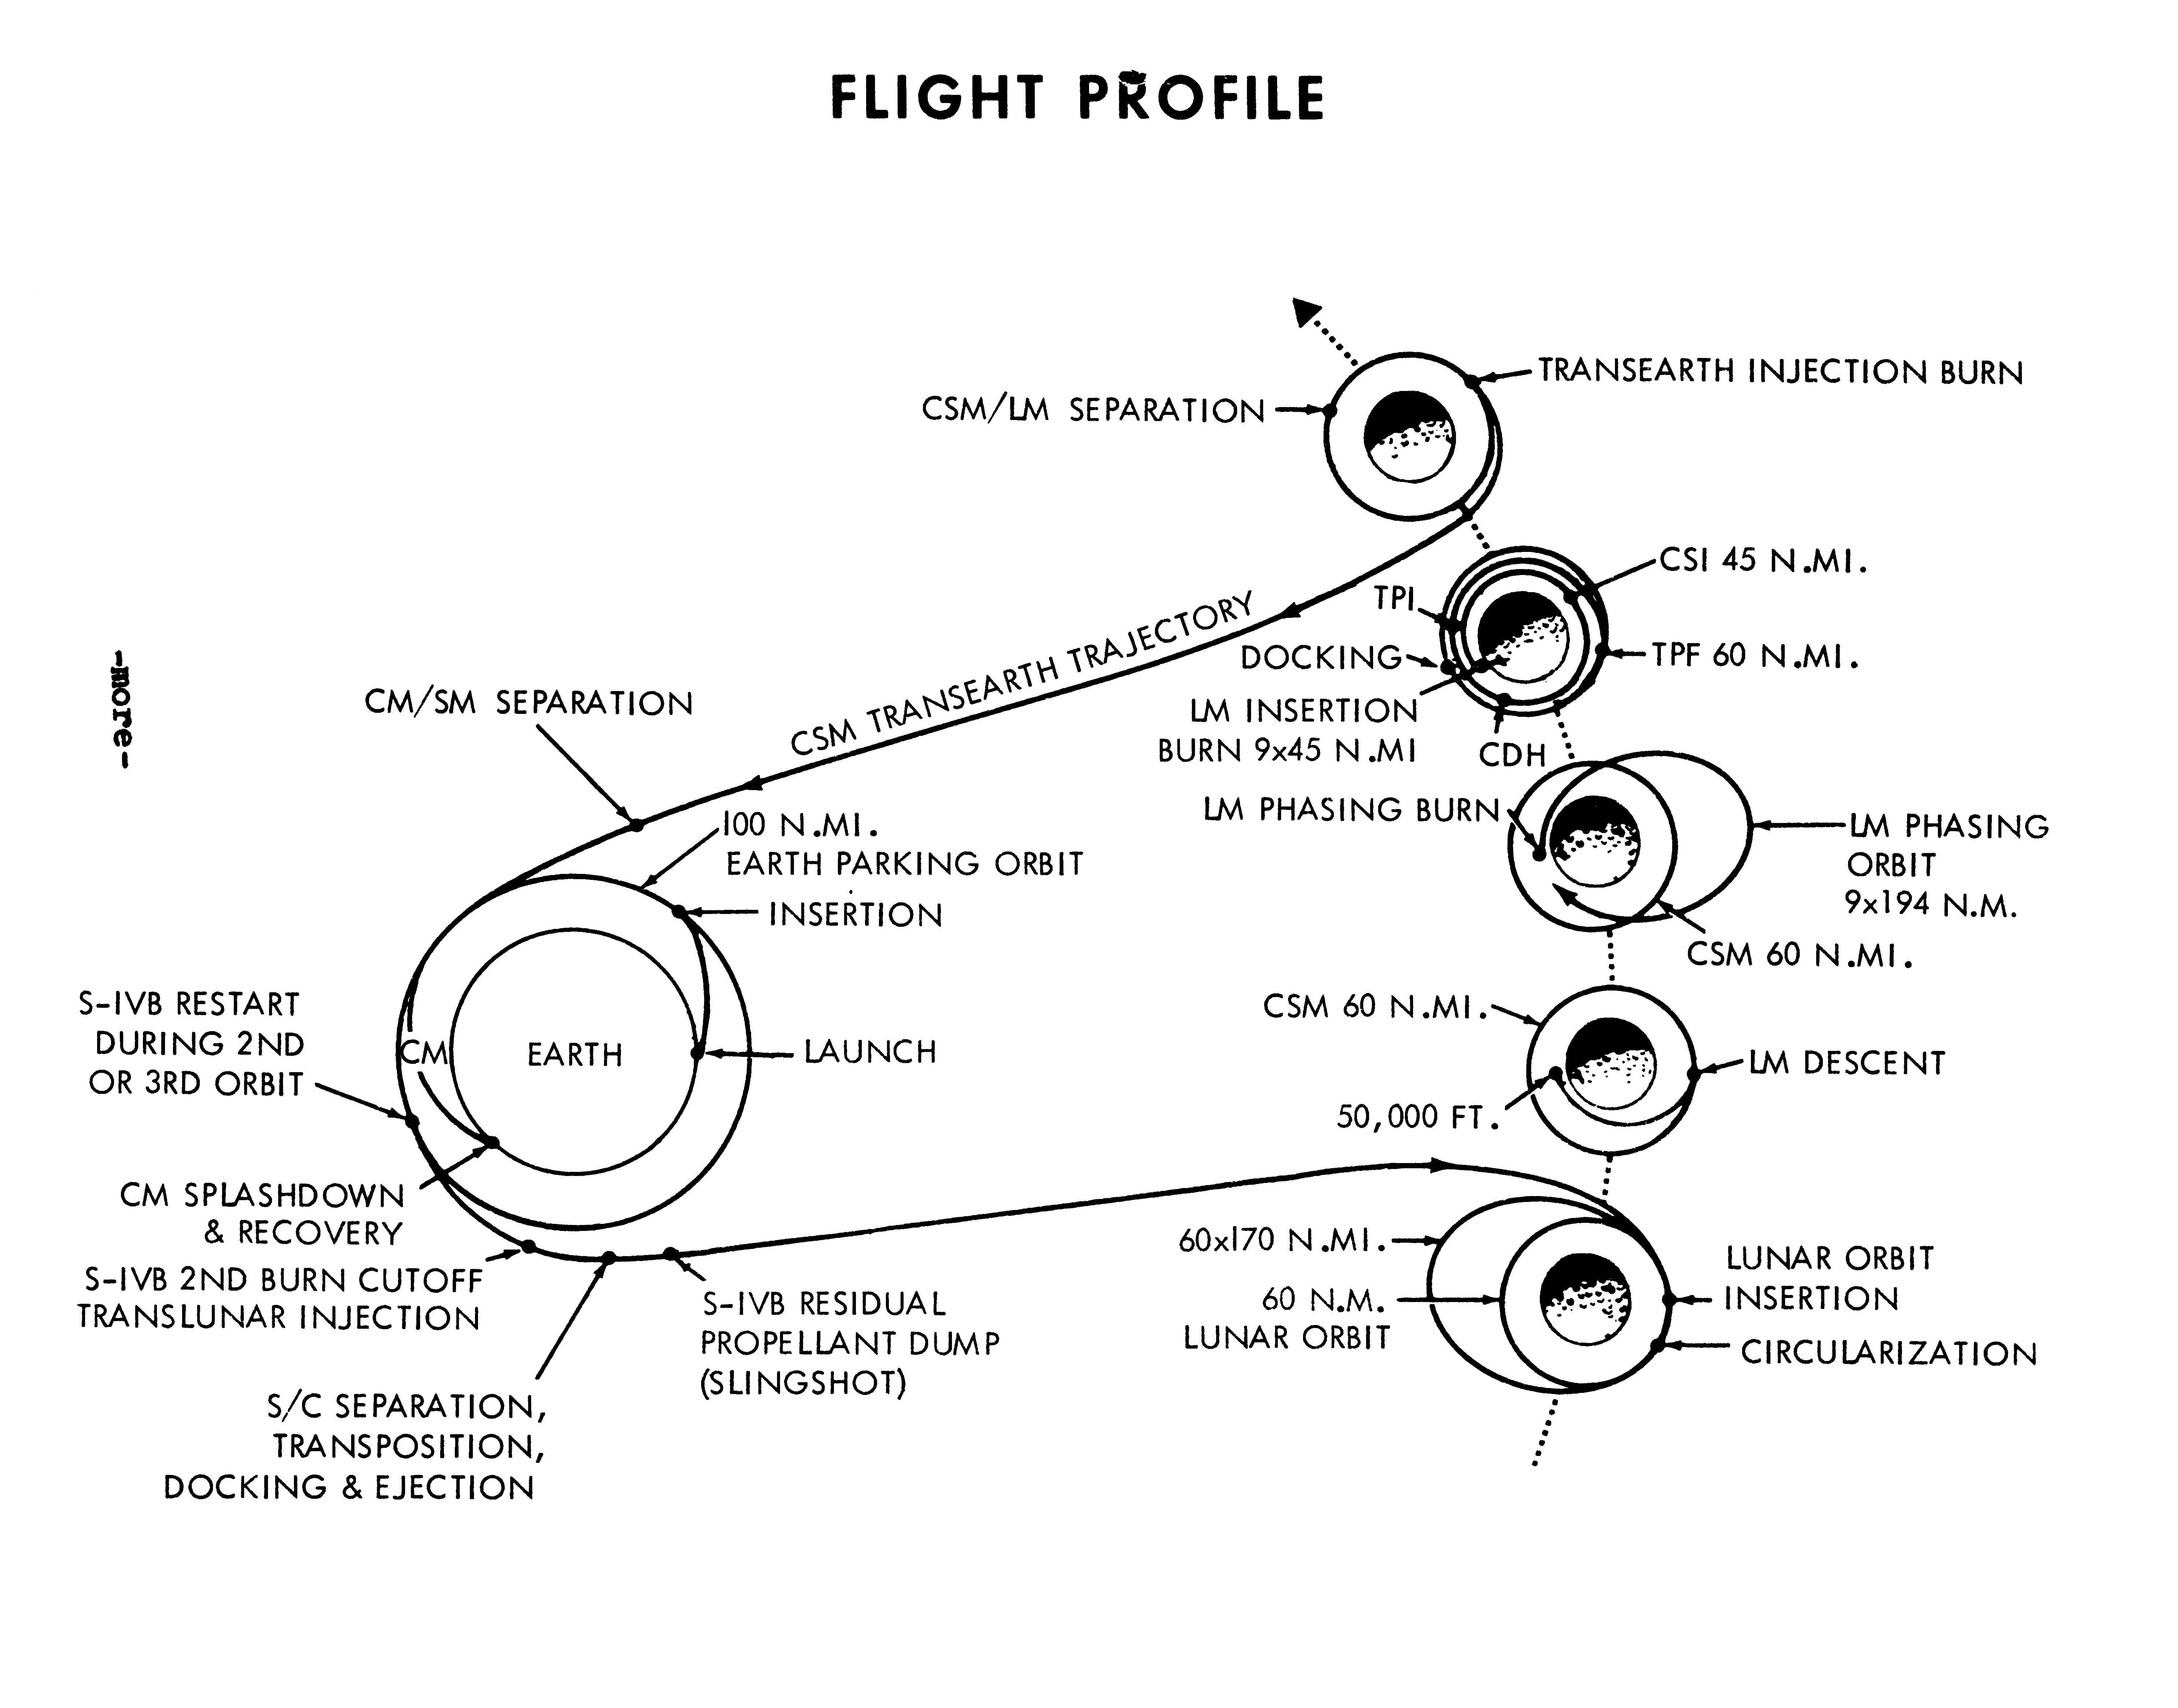 The Apollo 10 flight plan